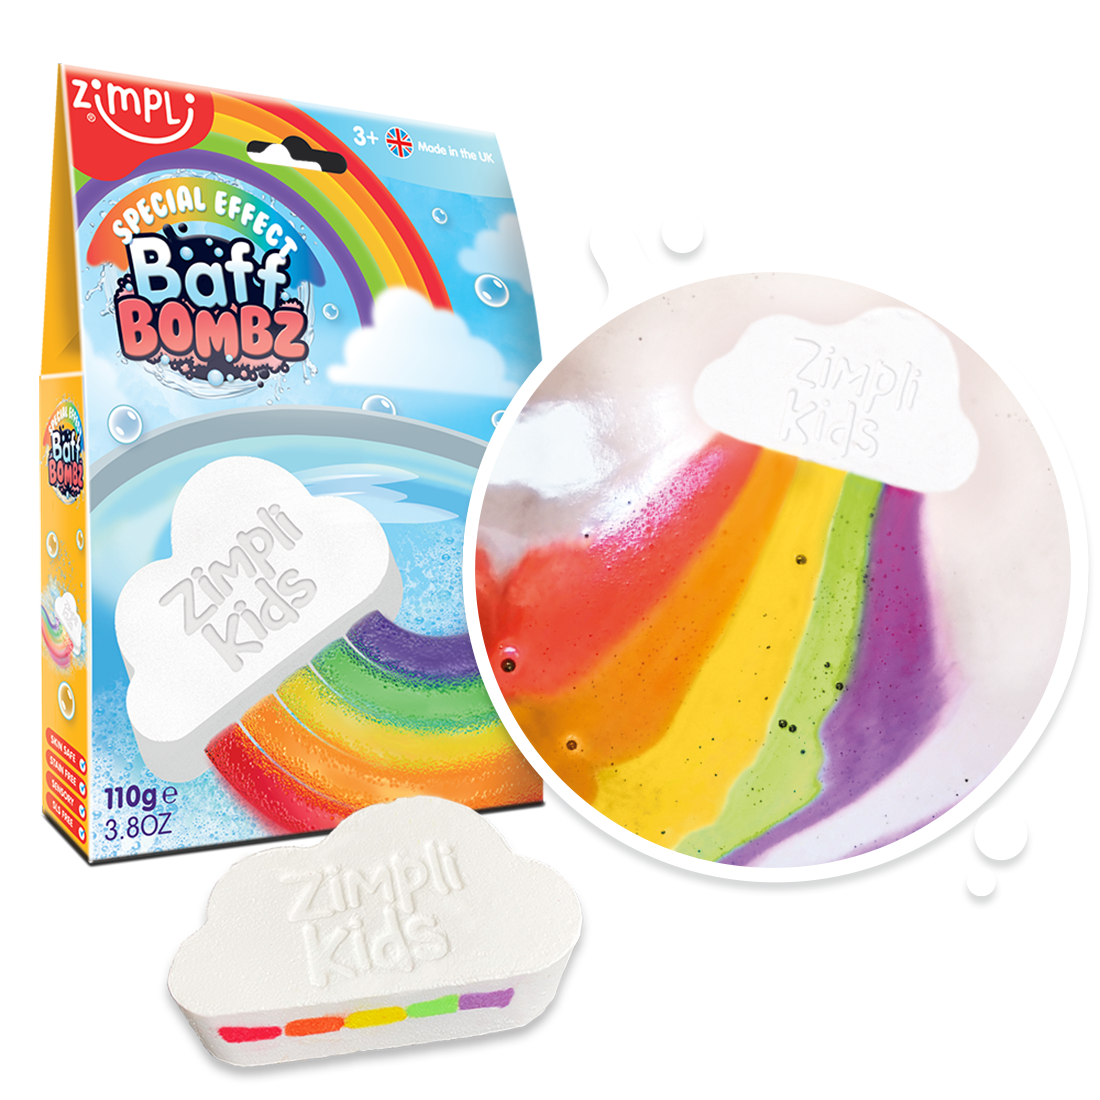 Zimpli Large Rainbow Special Effect Baff Bombz